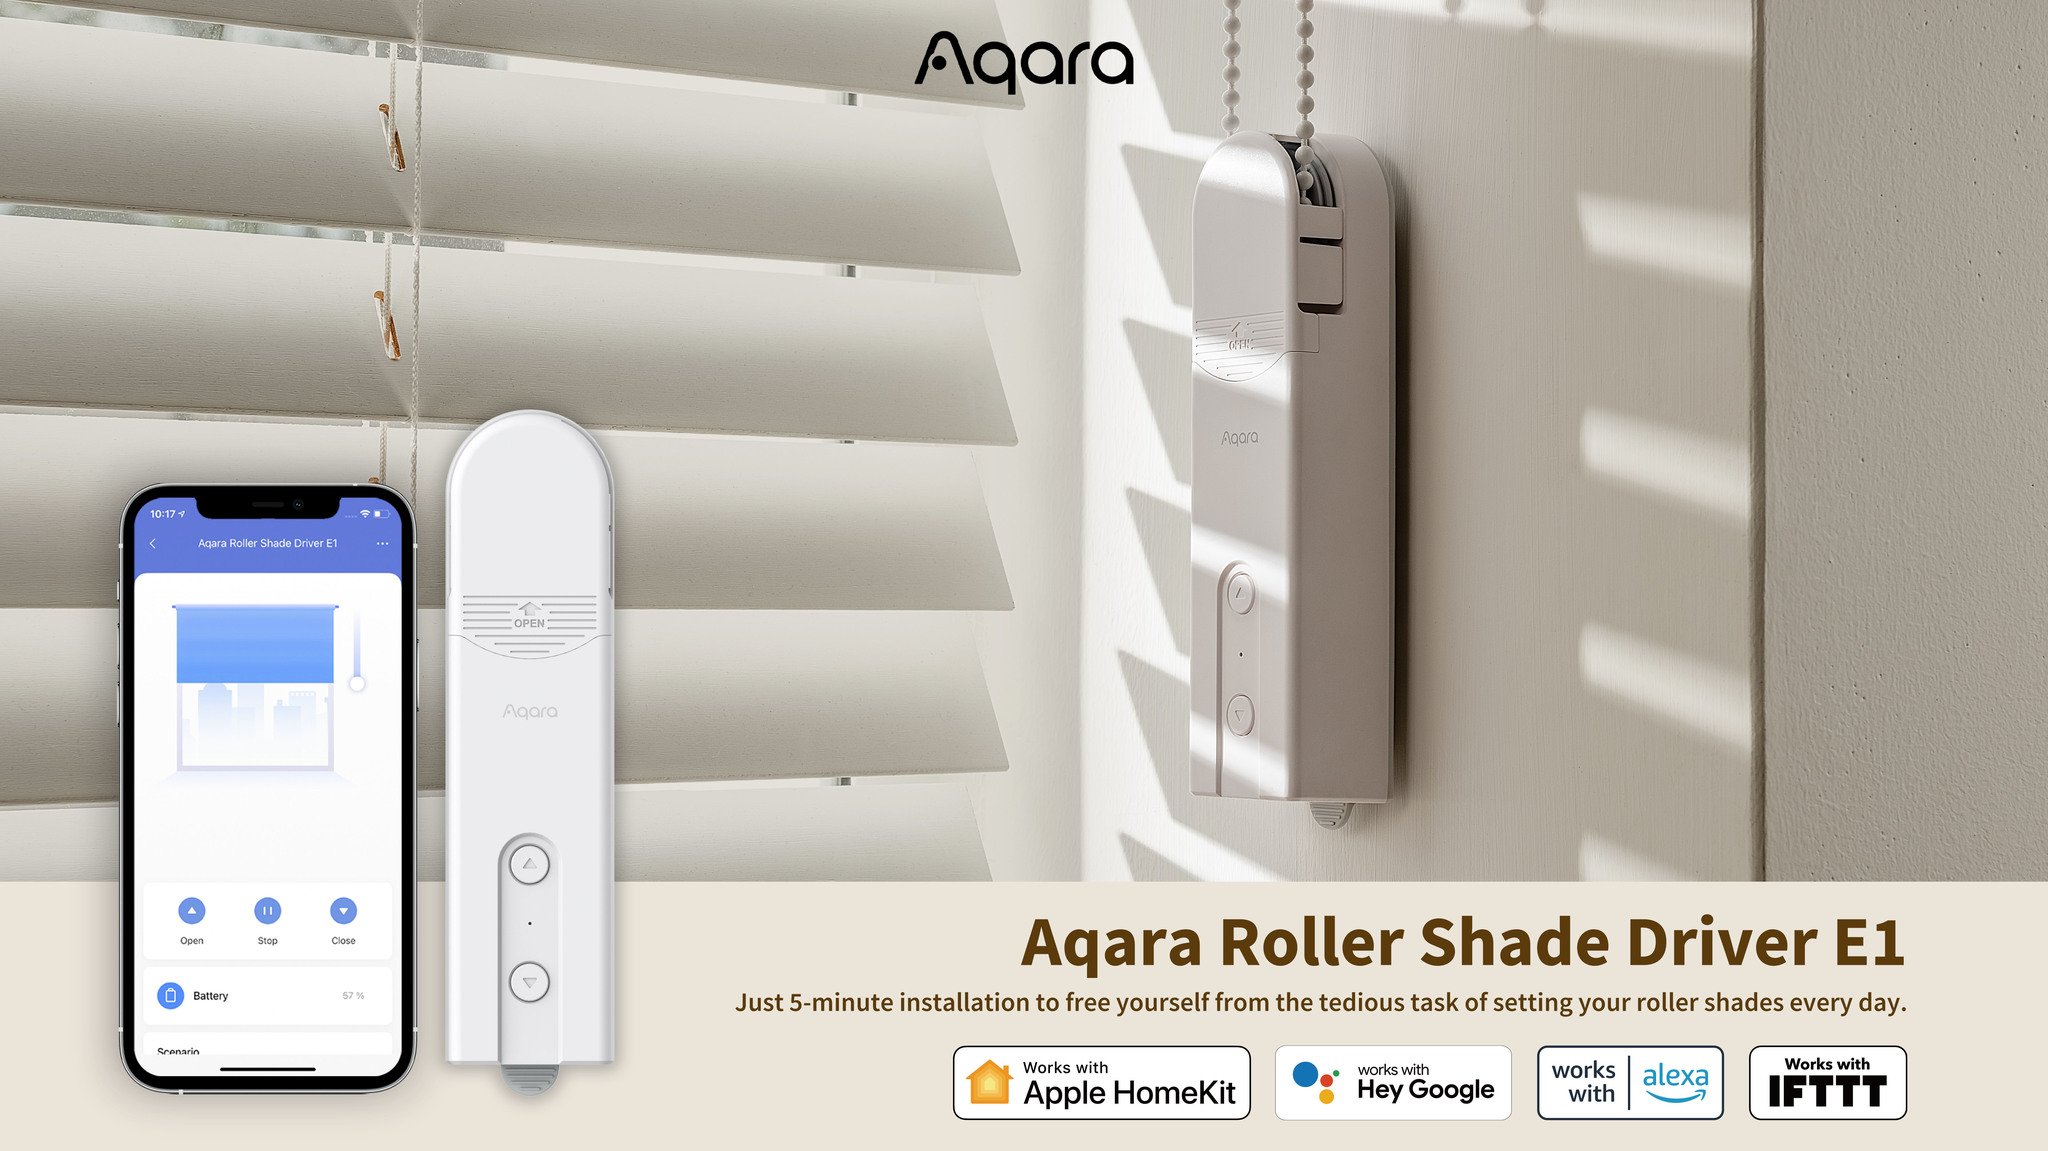 Aqara Roller Shade Driver E1 Press